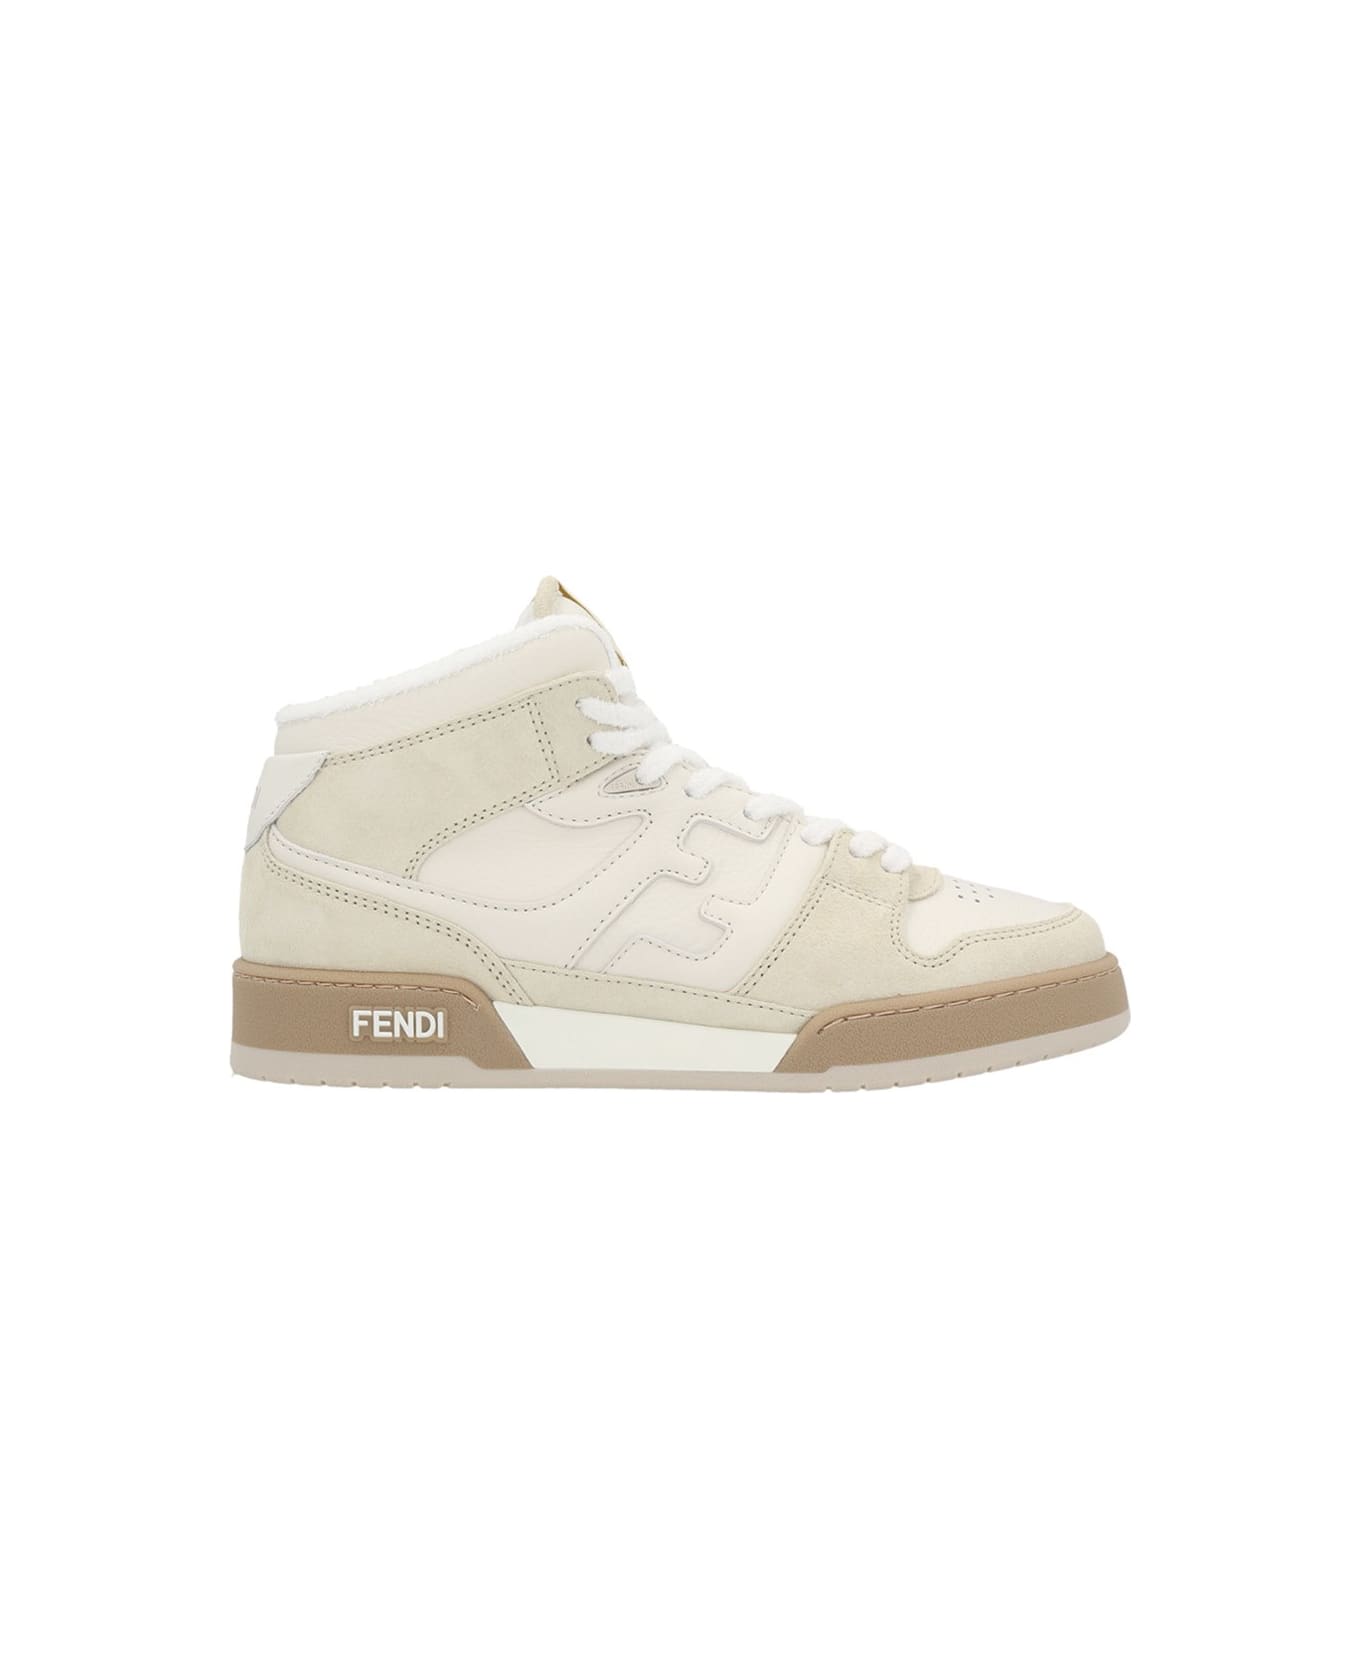 Fendi Match Sneakers - Ice+bianco fendi+ice